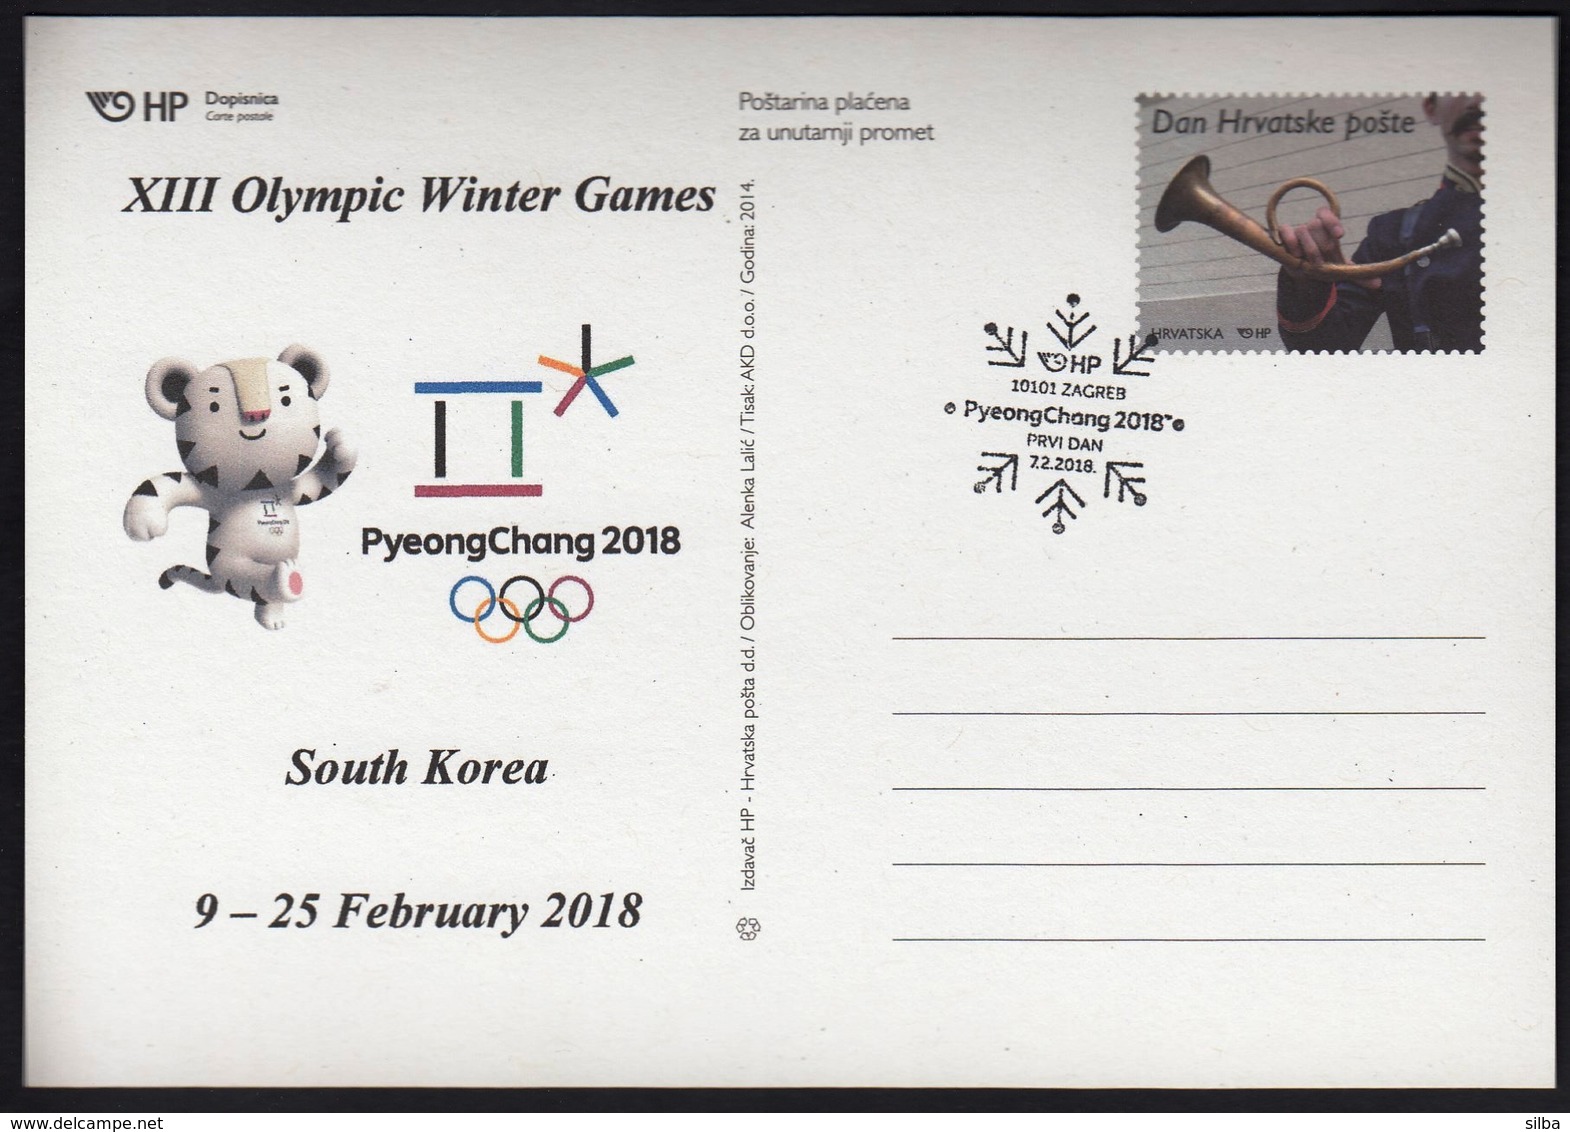 Croatia Zagreb 2018 / XIII Olympic Winter Games PyeongChang, South Korea - Invierno 2018 : Pieonchang